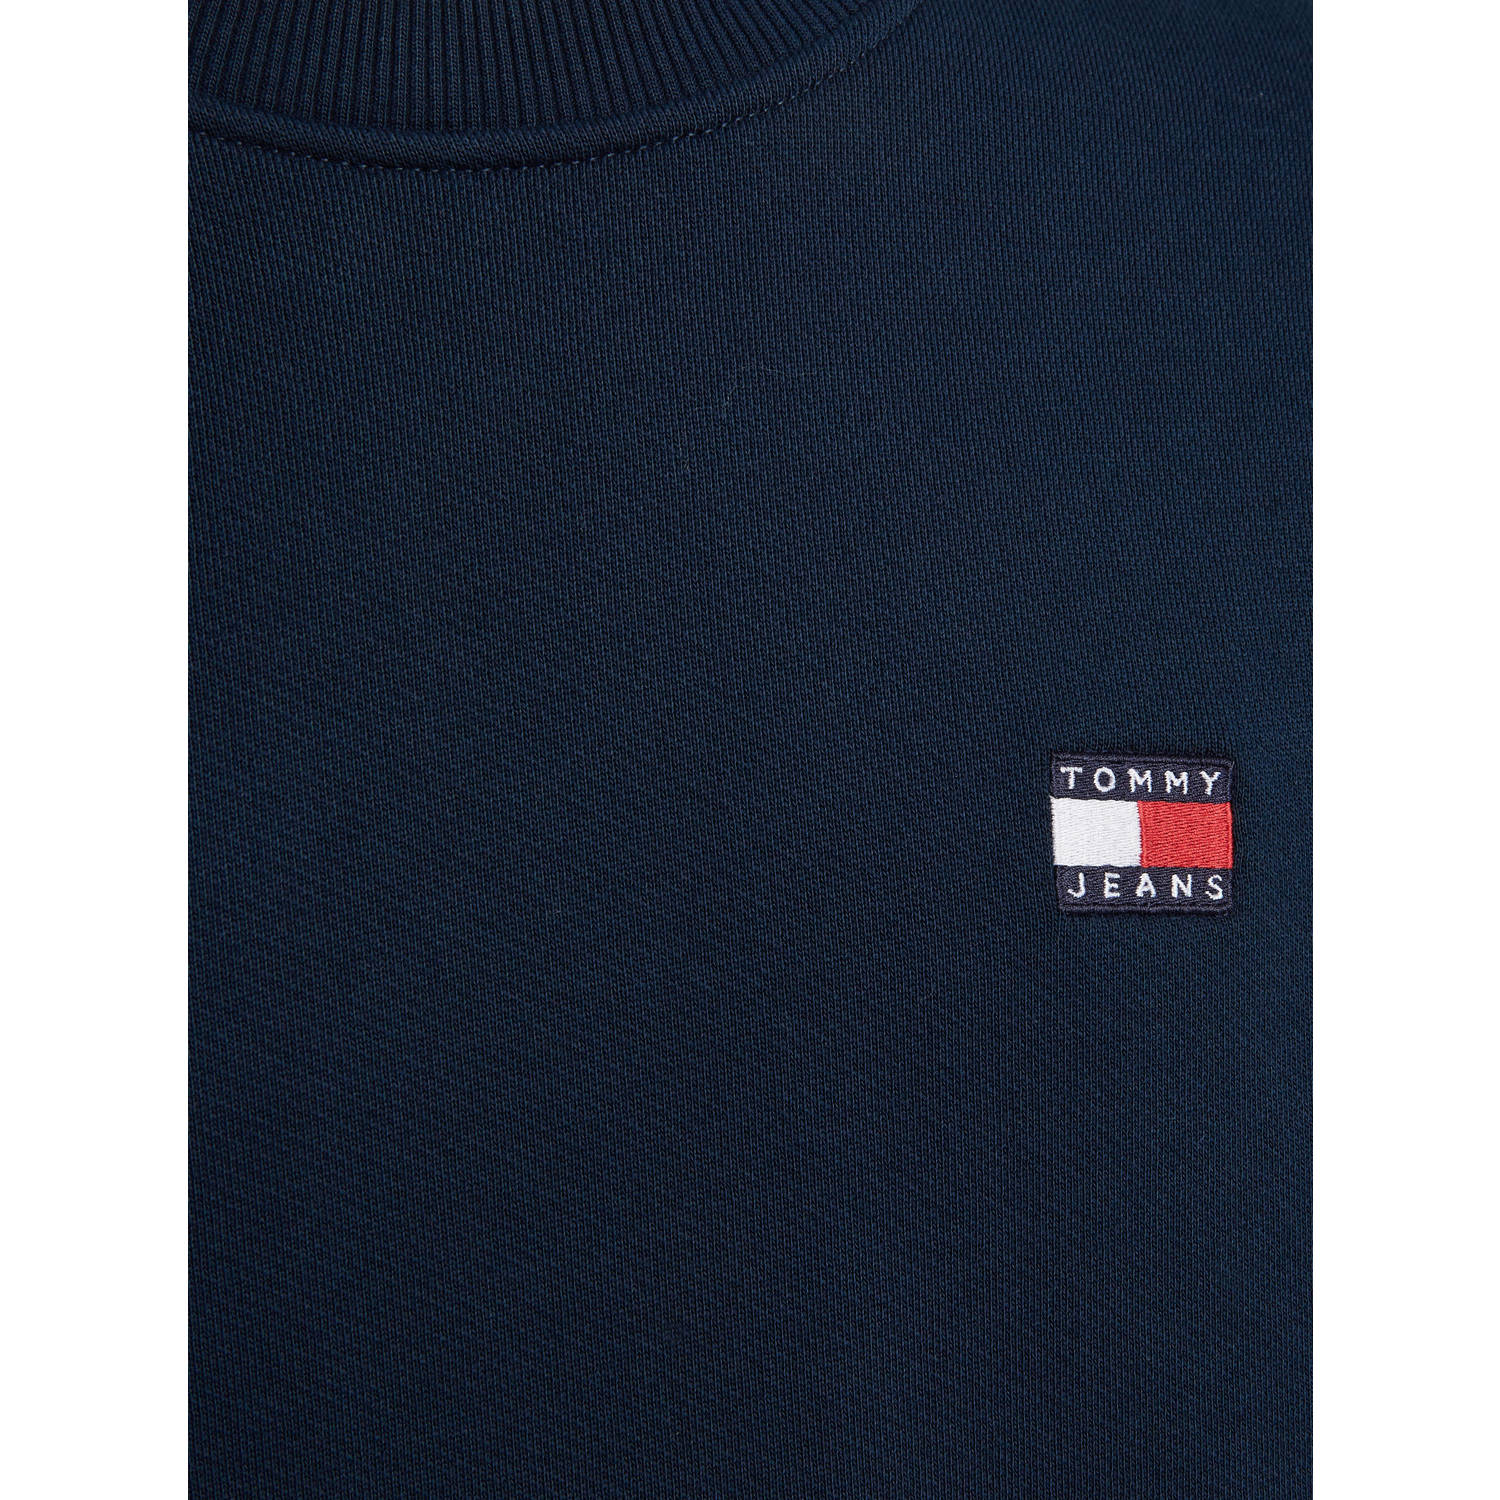 Tommy Jeans sweater met logo c1g dark night navy